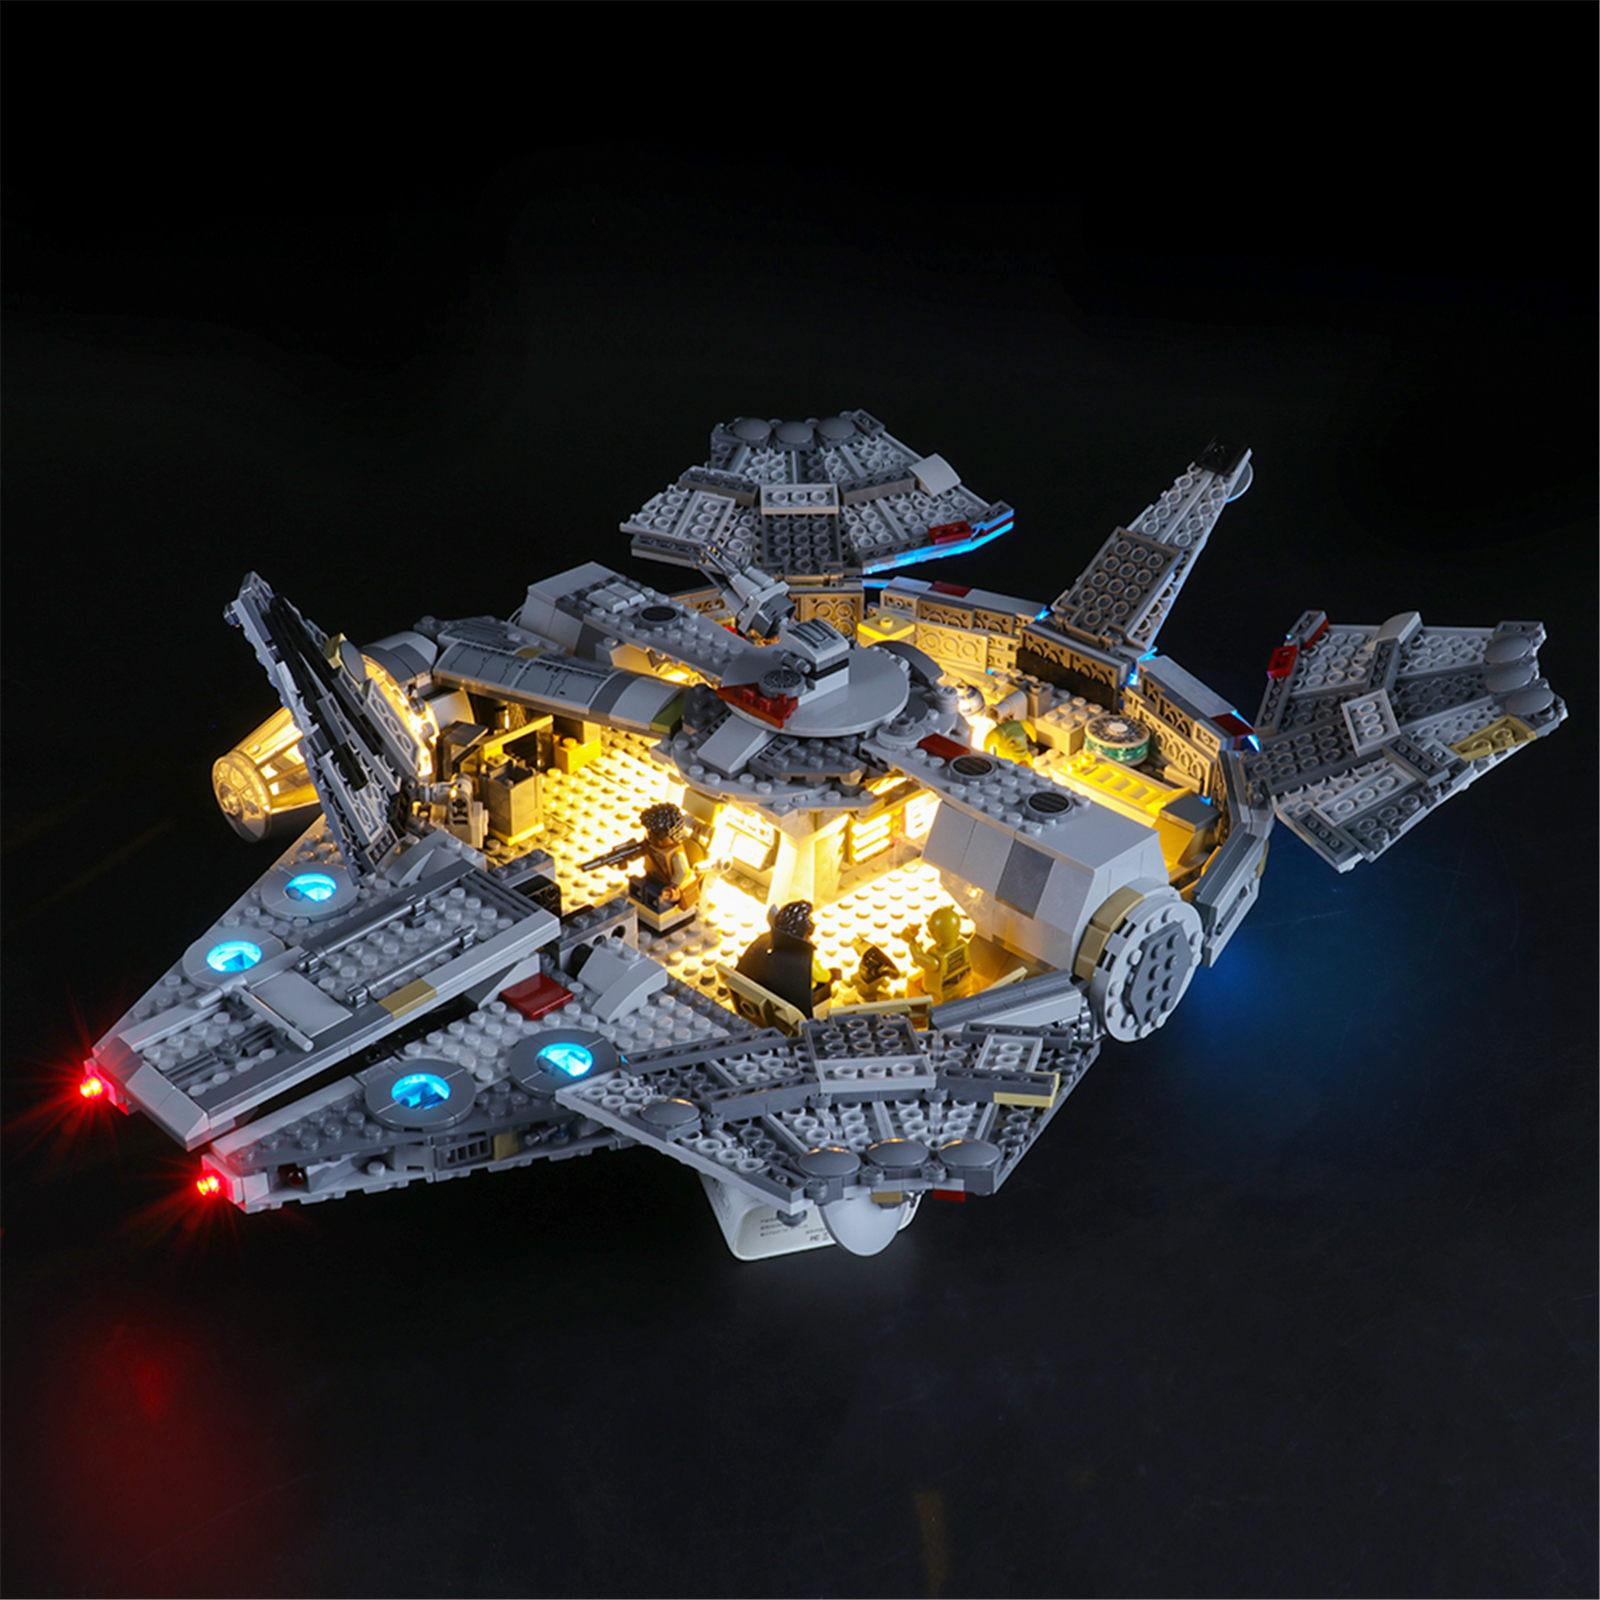 LED-Beleuchtungsset für LEGO Star War 75105/05007 Millennium Falcon Building 